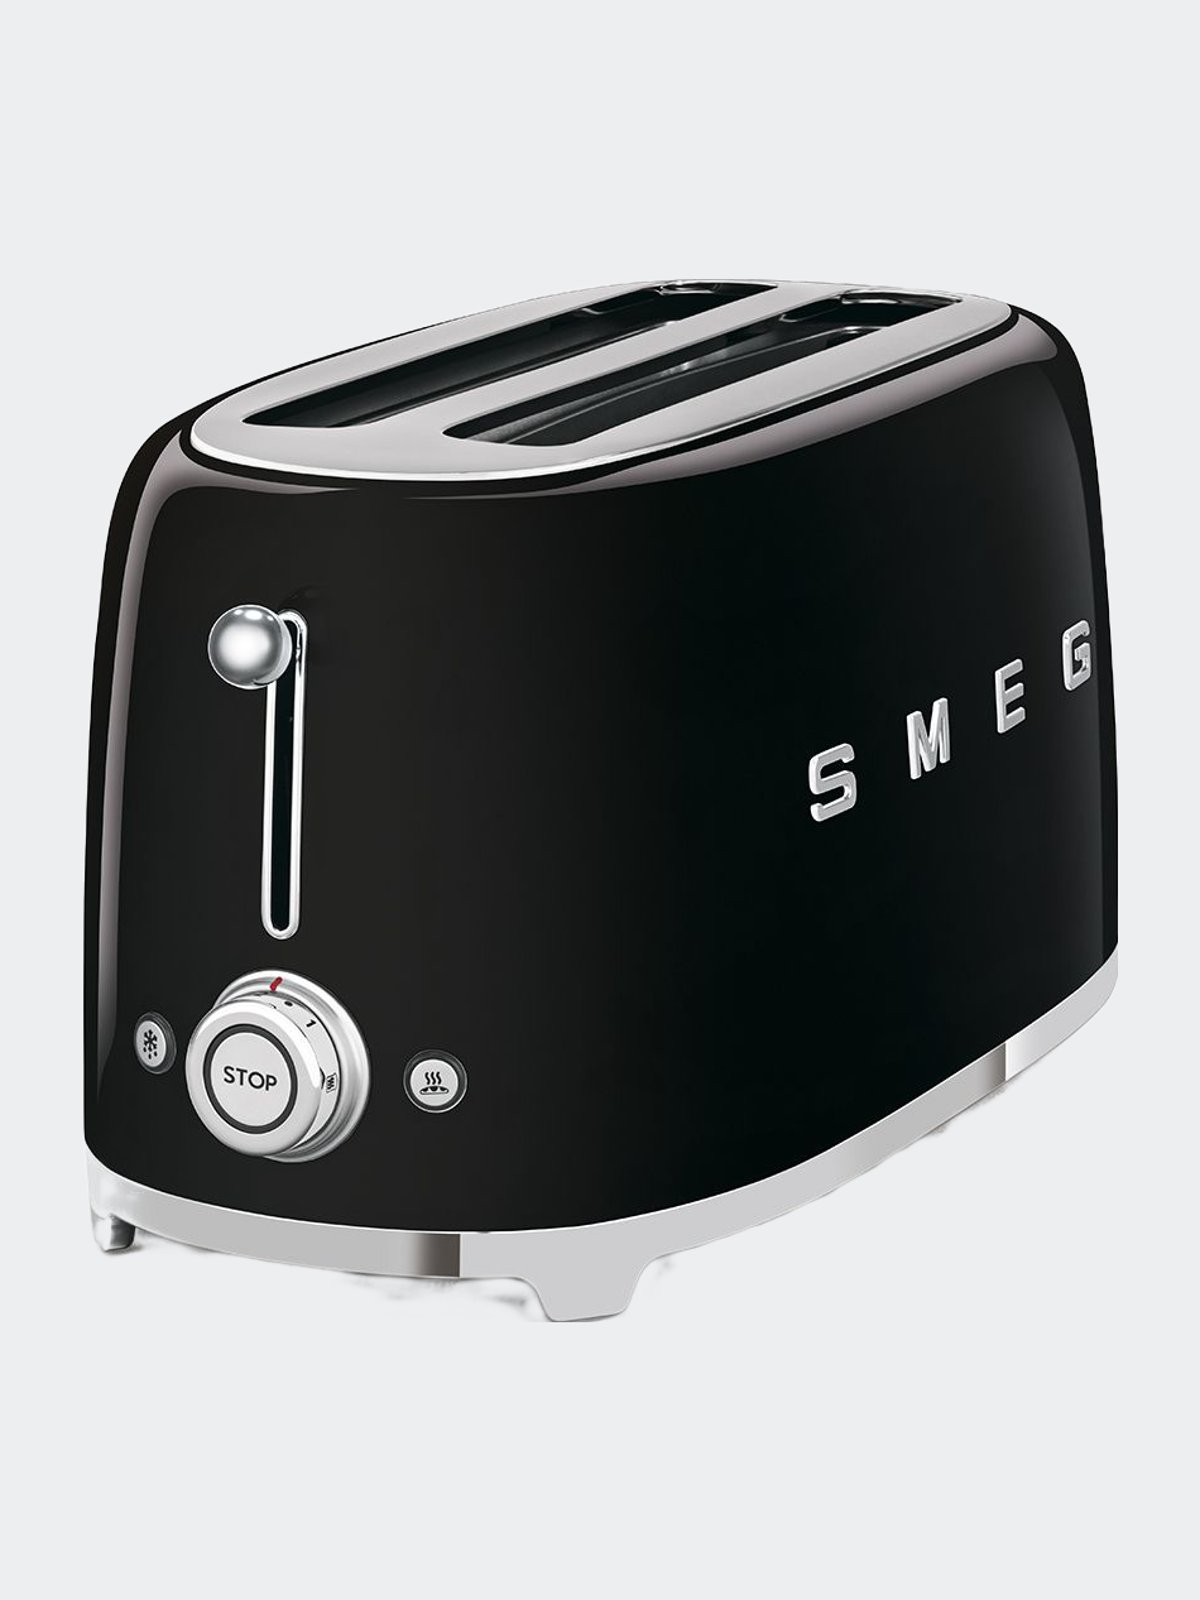 https://images.verishop.com/smeg-4-slice-toaster-tsf02/M00812895020106-260486818?auto=format&cs=strip&fit=max&w=1200